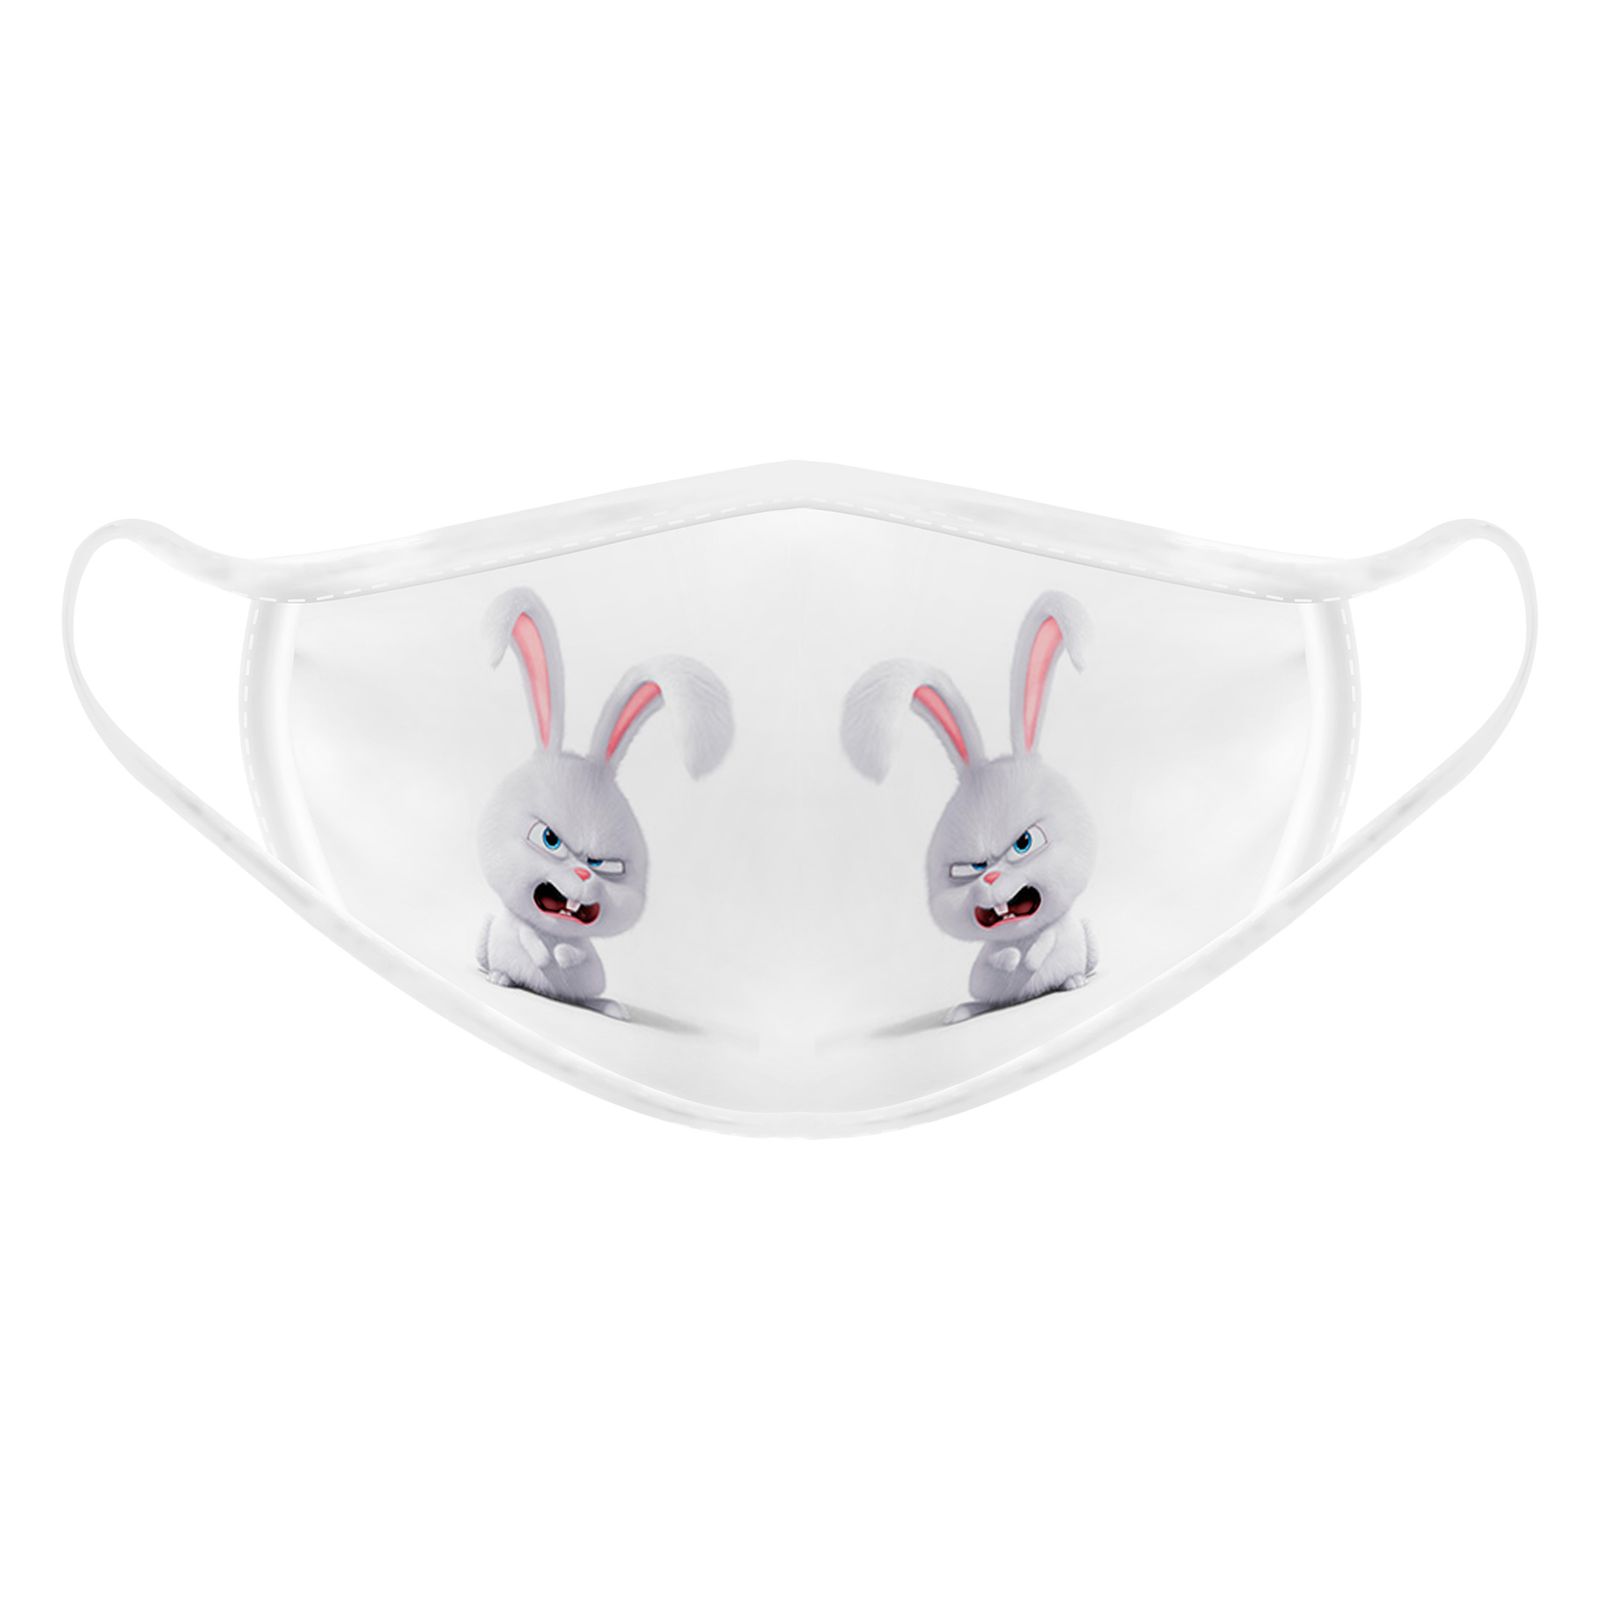 ماسک تزیینی صورت بچگانه طرح خرگوش عصبانی کد 617015 -  - 2